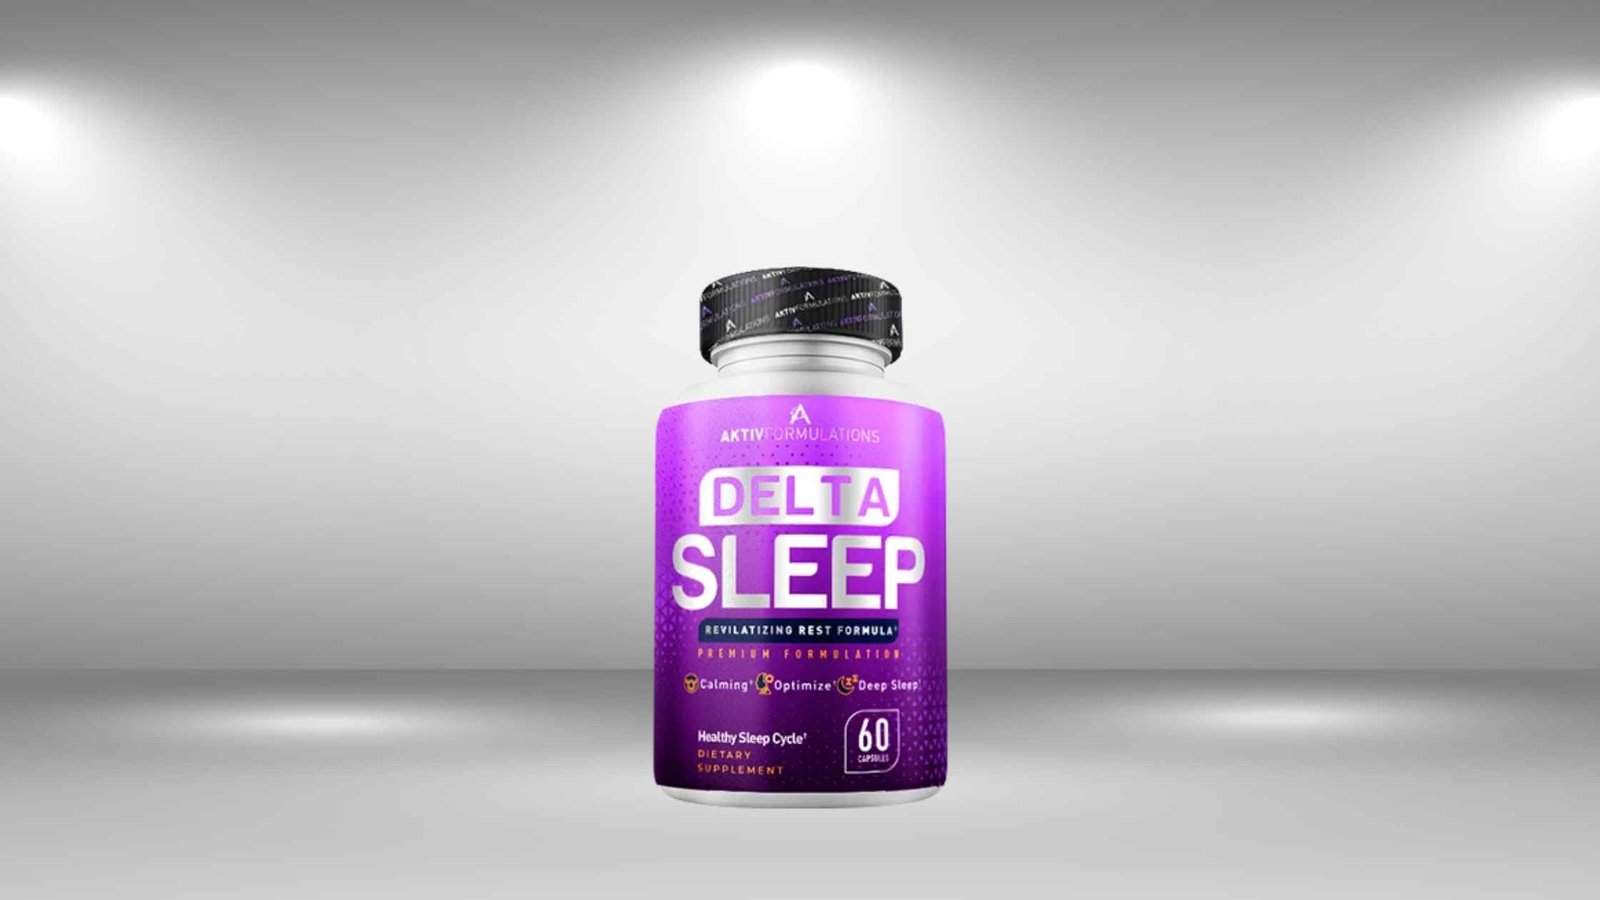 Aktiv Formulations Delta Sleep Reviews